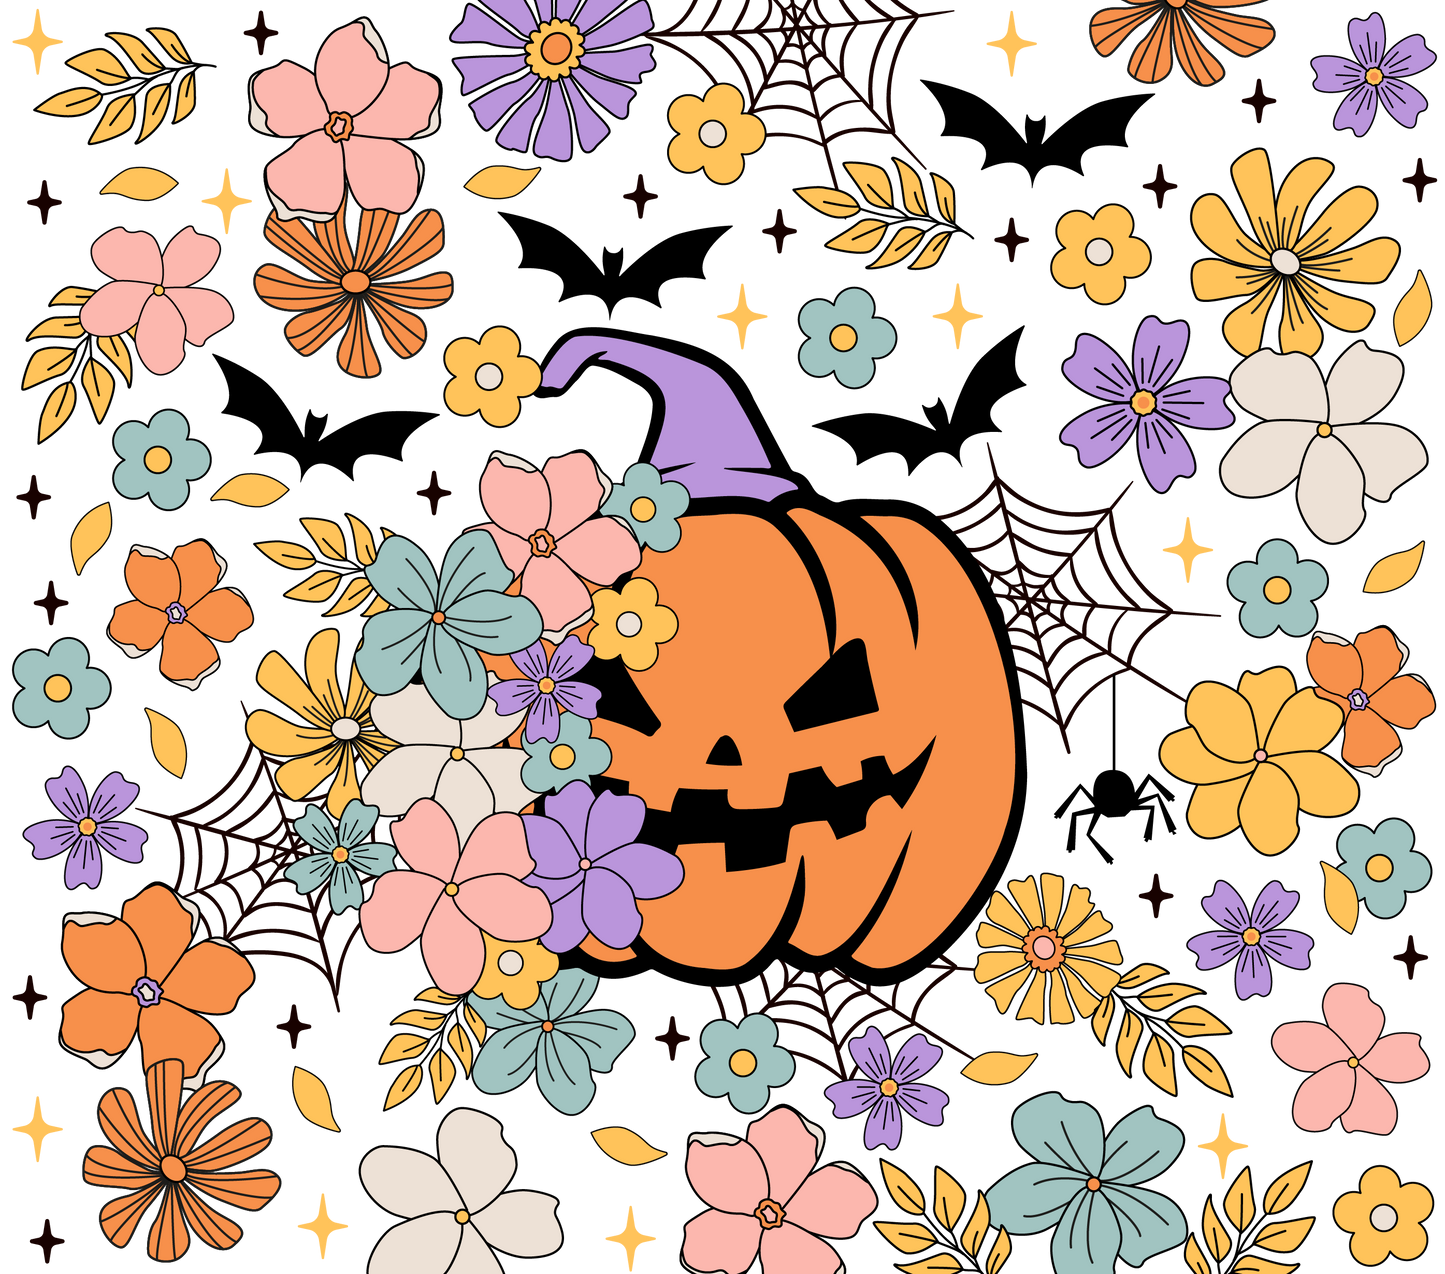 Halloween Pumpkin Flower - 20 Oz Sublimation Transfer